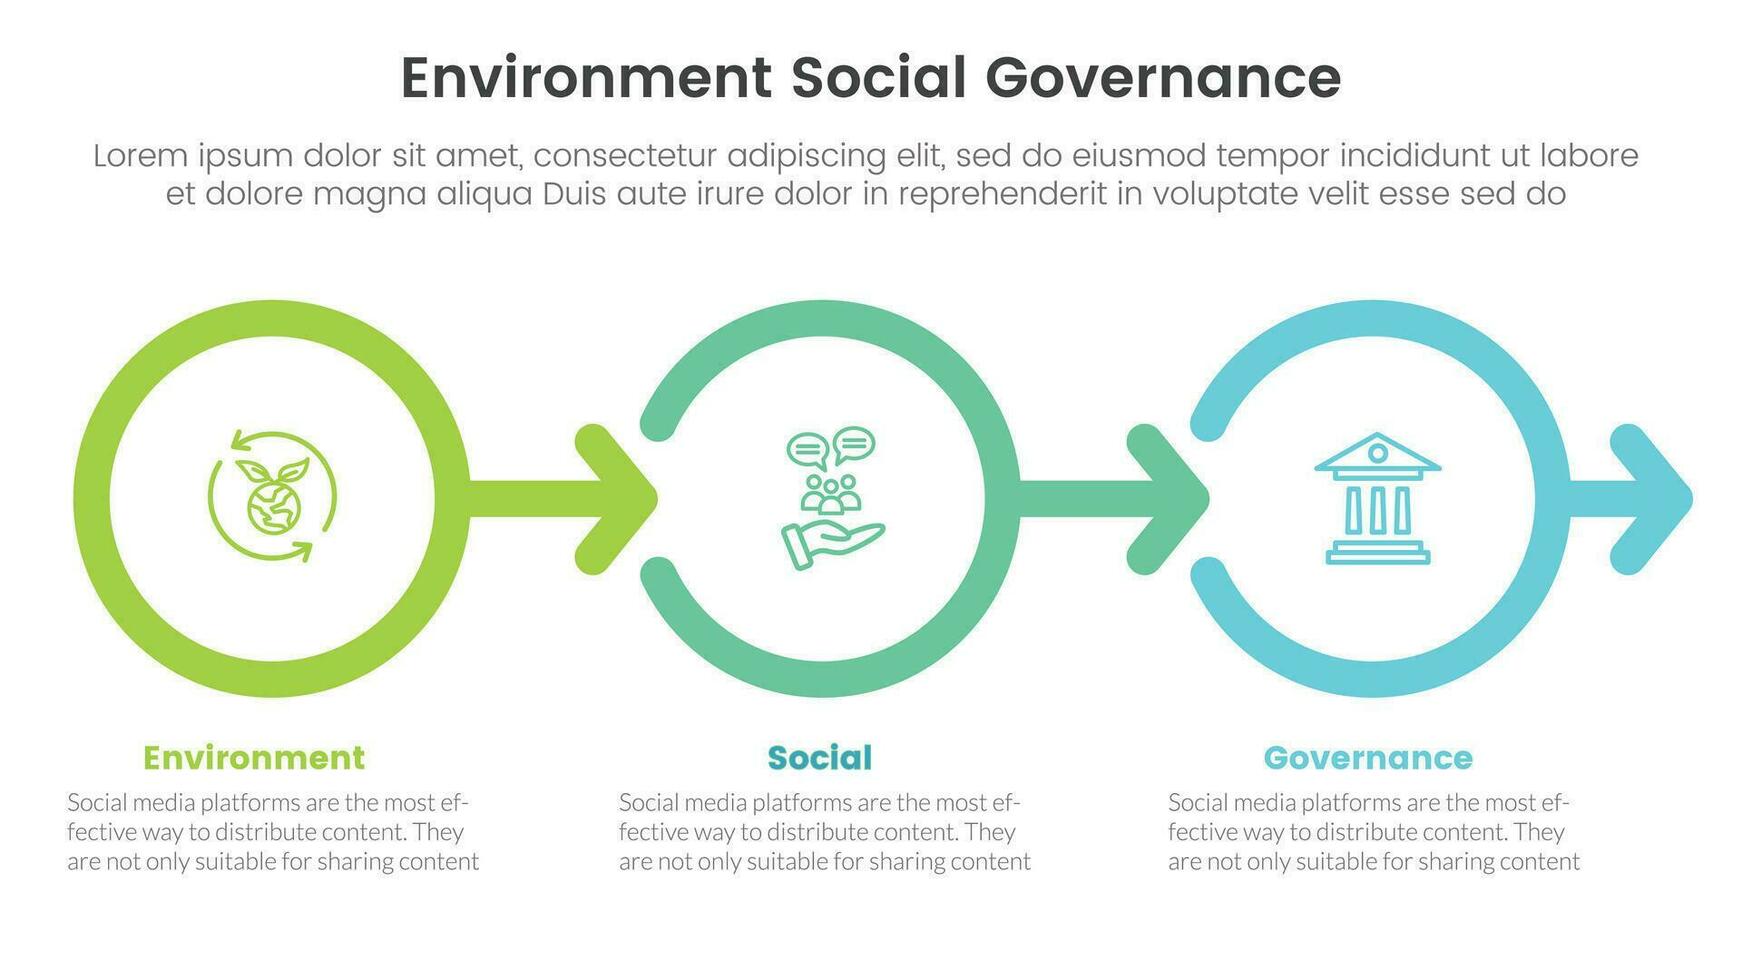 esg ambiental social y gobernancia infografía 3 punto etapa modelo con circulo y contorno Derecha flecha concepto para diapositiva presentación vector